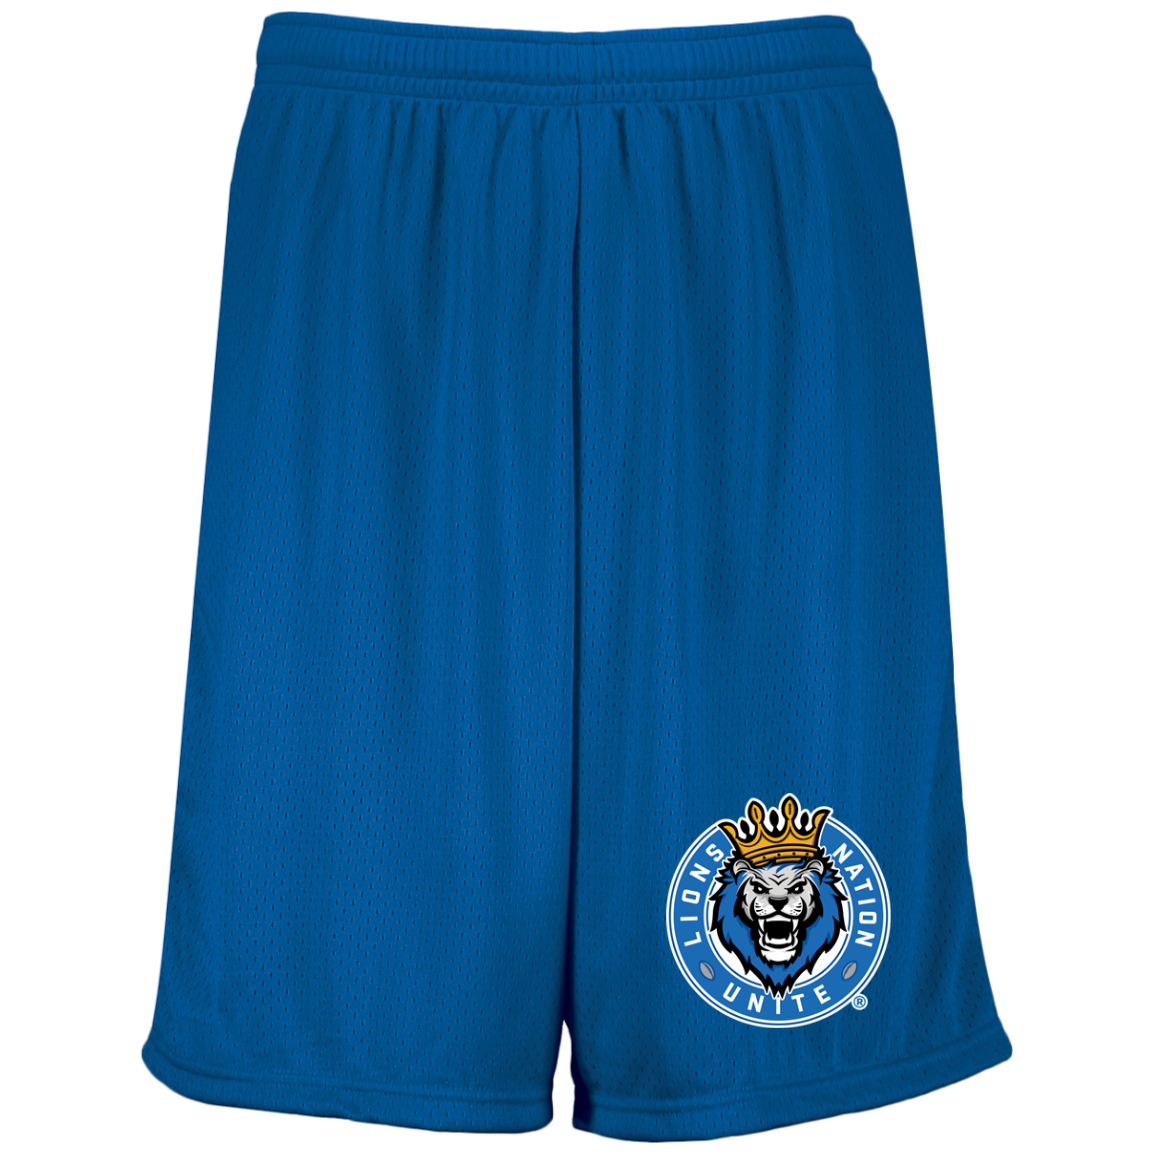 Lions Nation Unite® Men's 9-inch Inseam Mesh Shorts